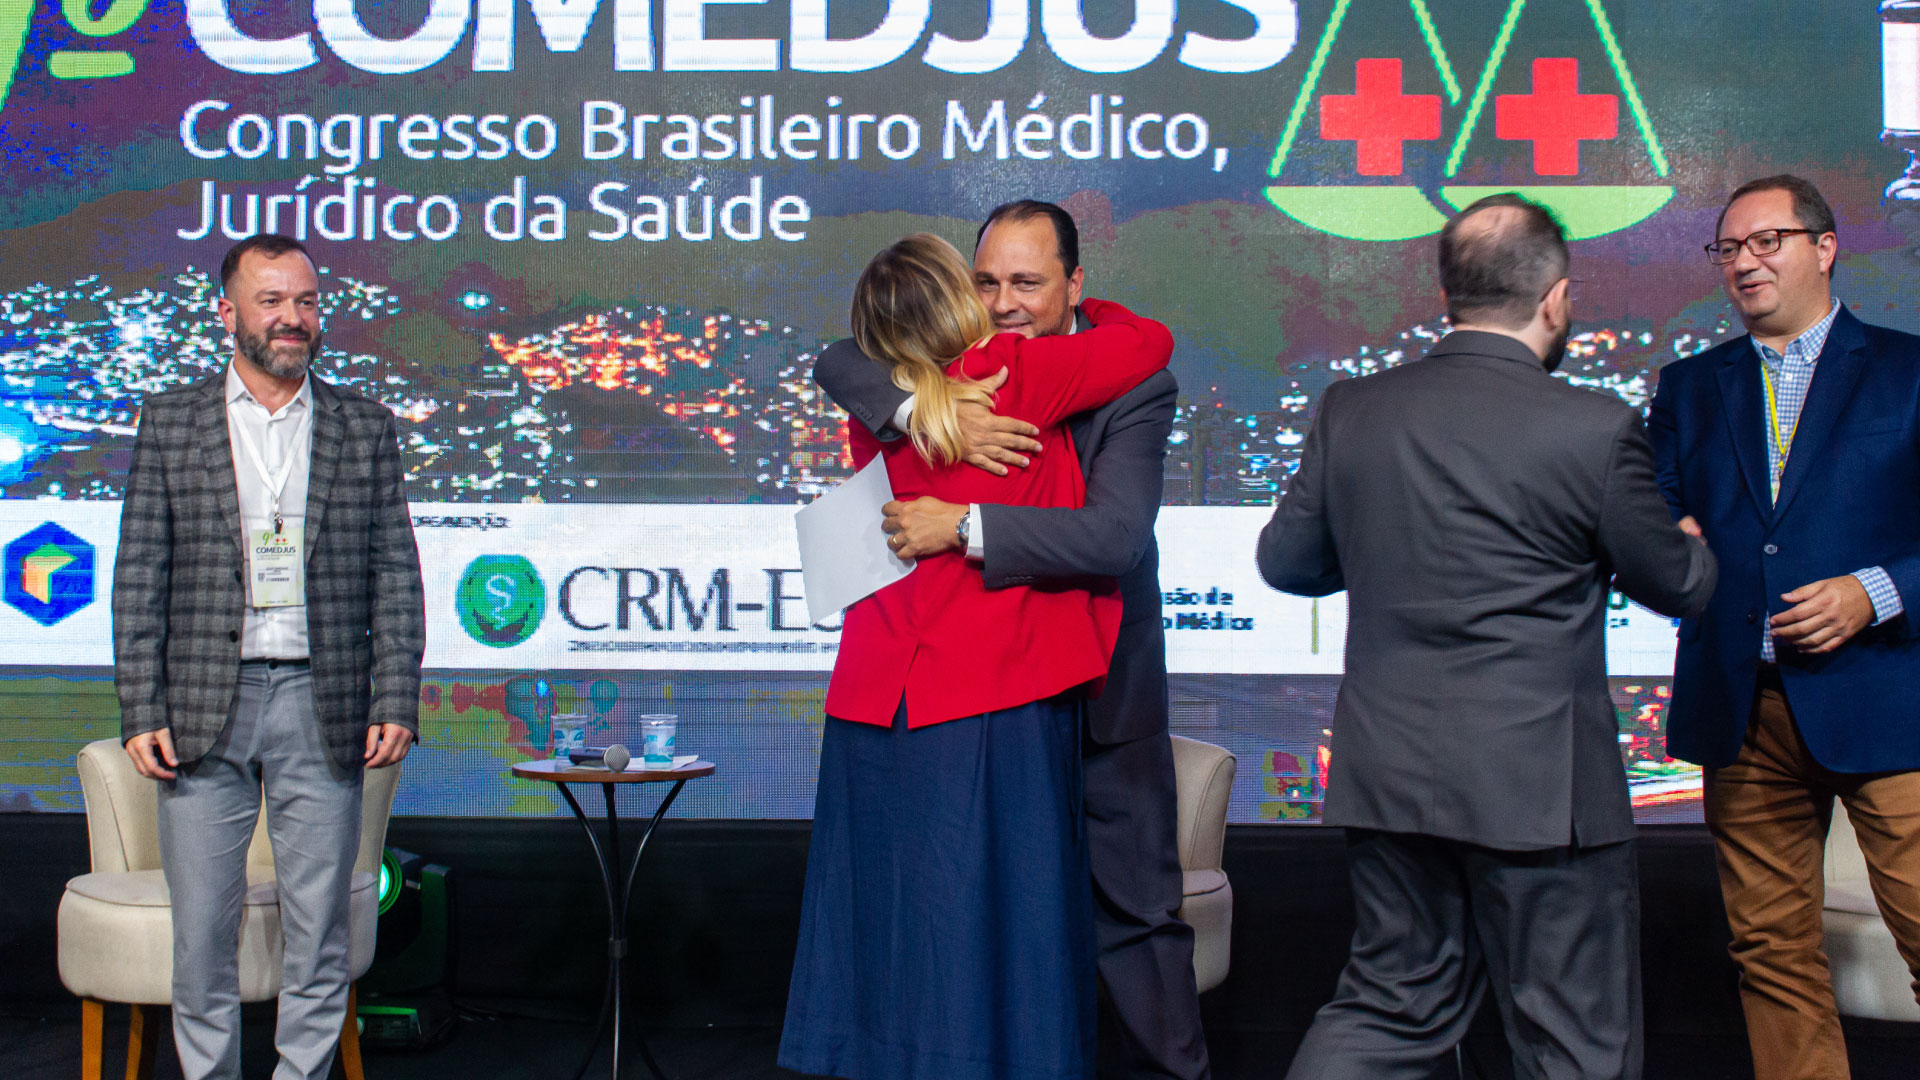 9 congresso brasileiro medico juridico da saude 6